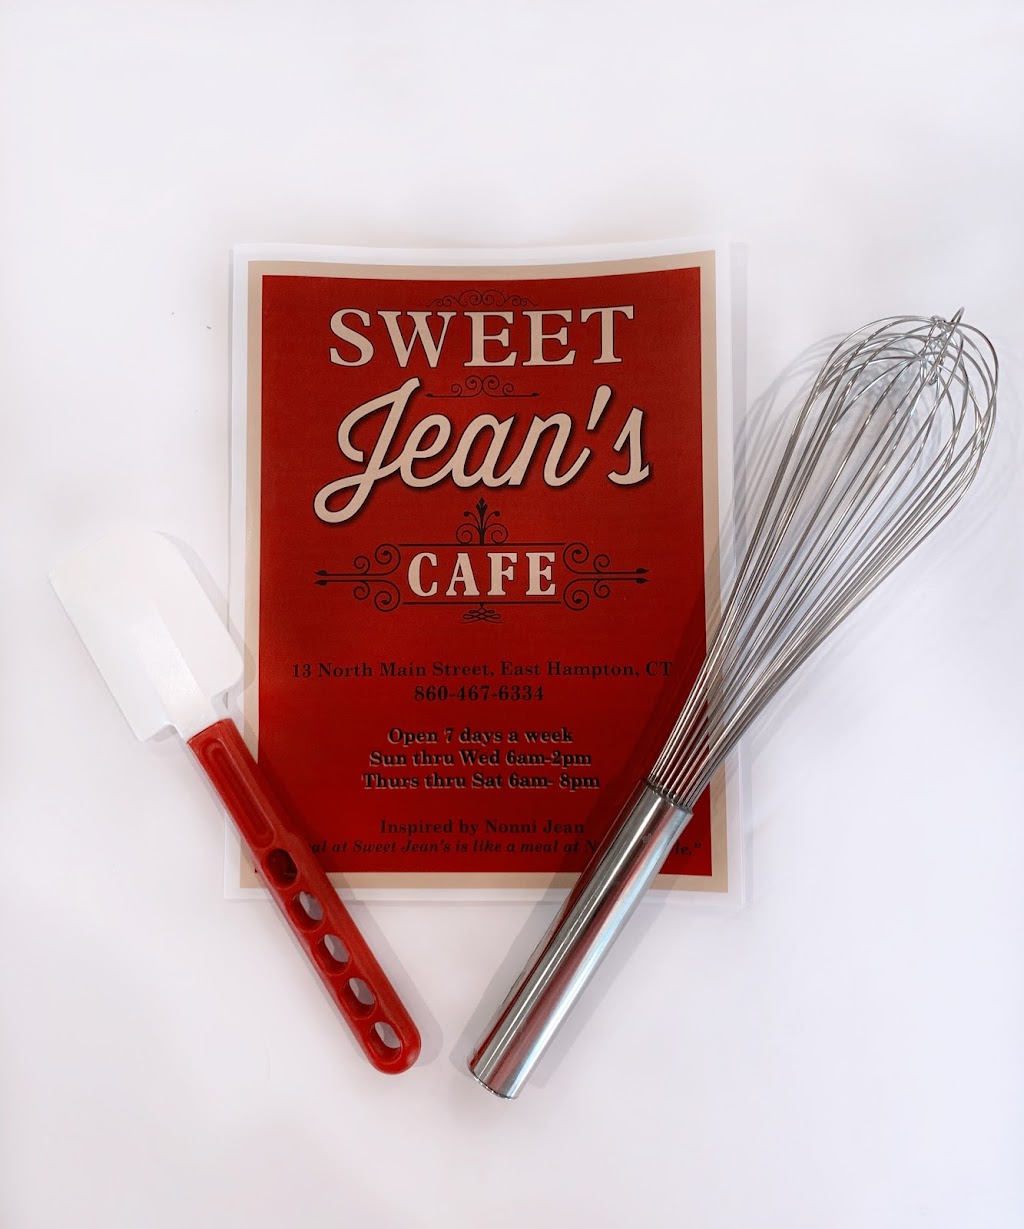 Sweet Jeans Cafe | 13 N Main St, East Hampton, CT 06424 | Phone: (860) 467-6334